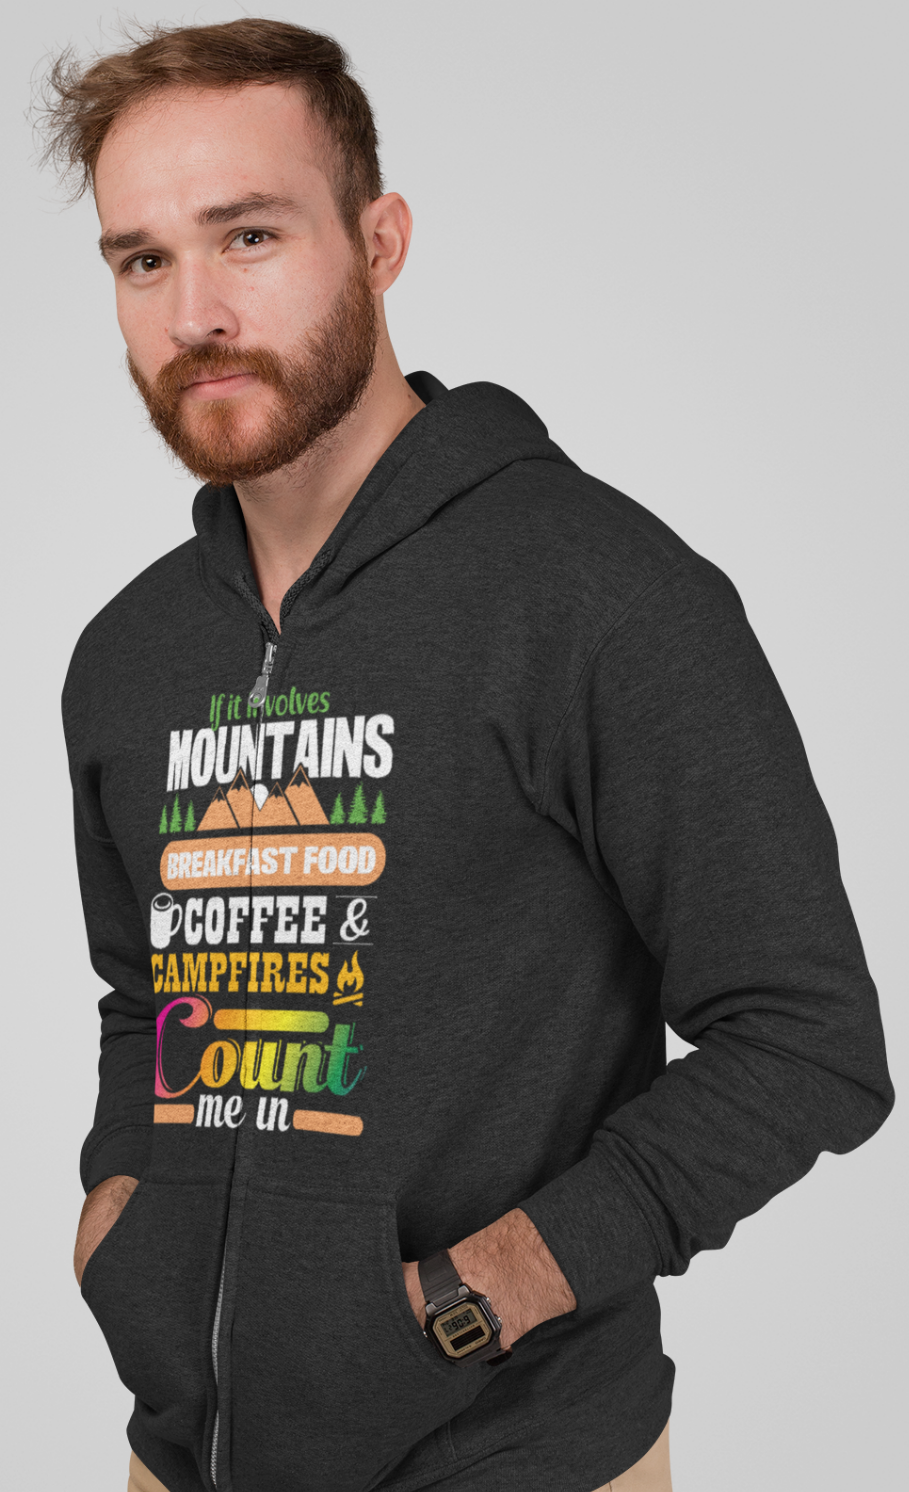 Mountain, breakfast food, campfires Full-zip hoodie sweatshirt